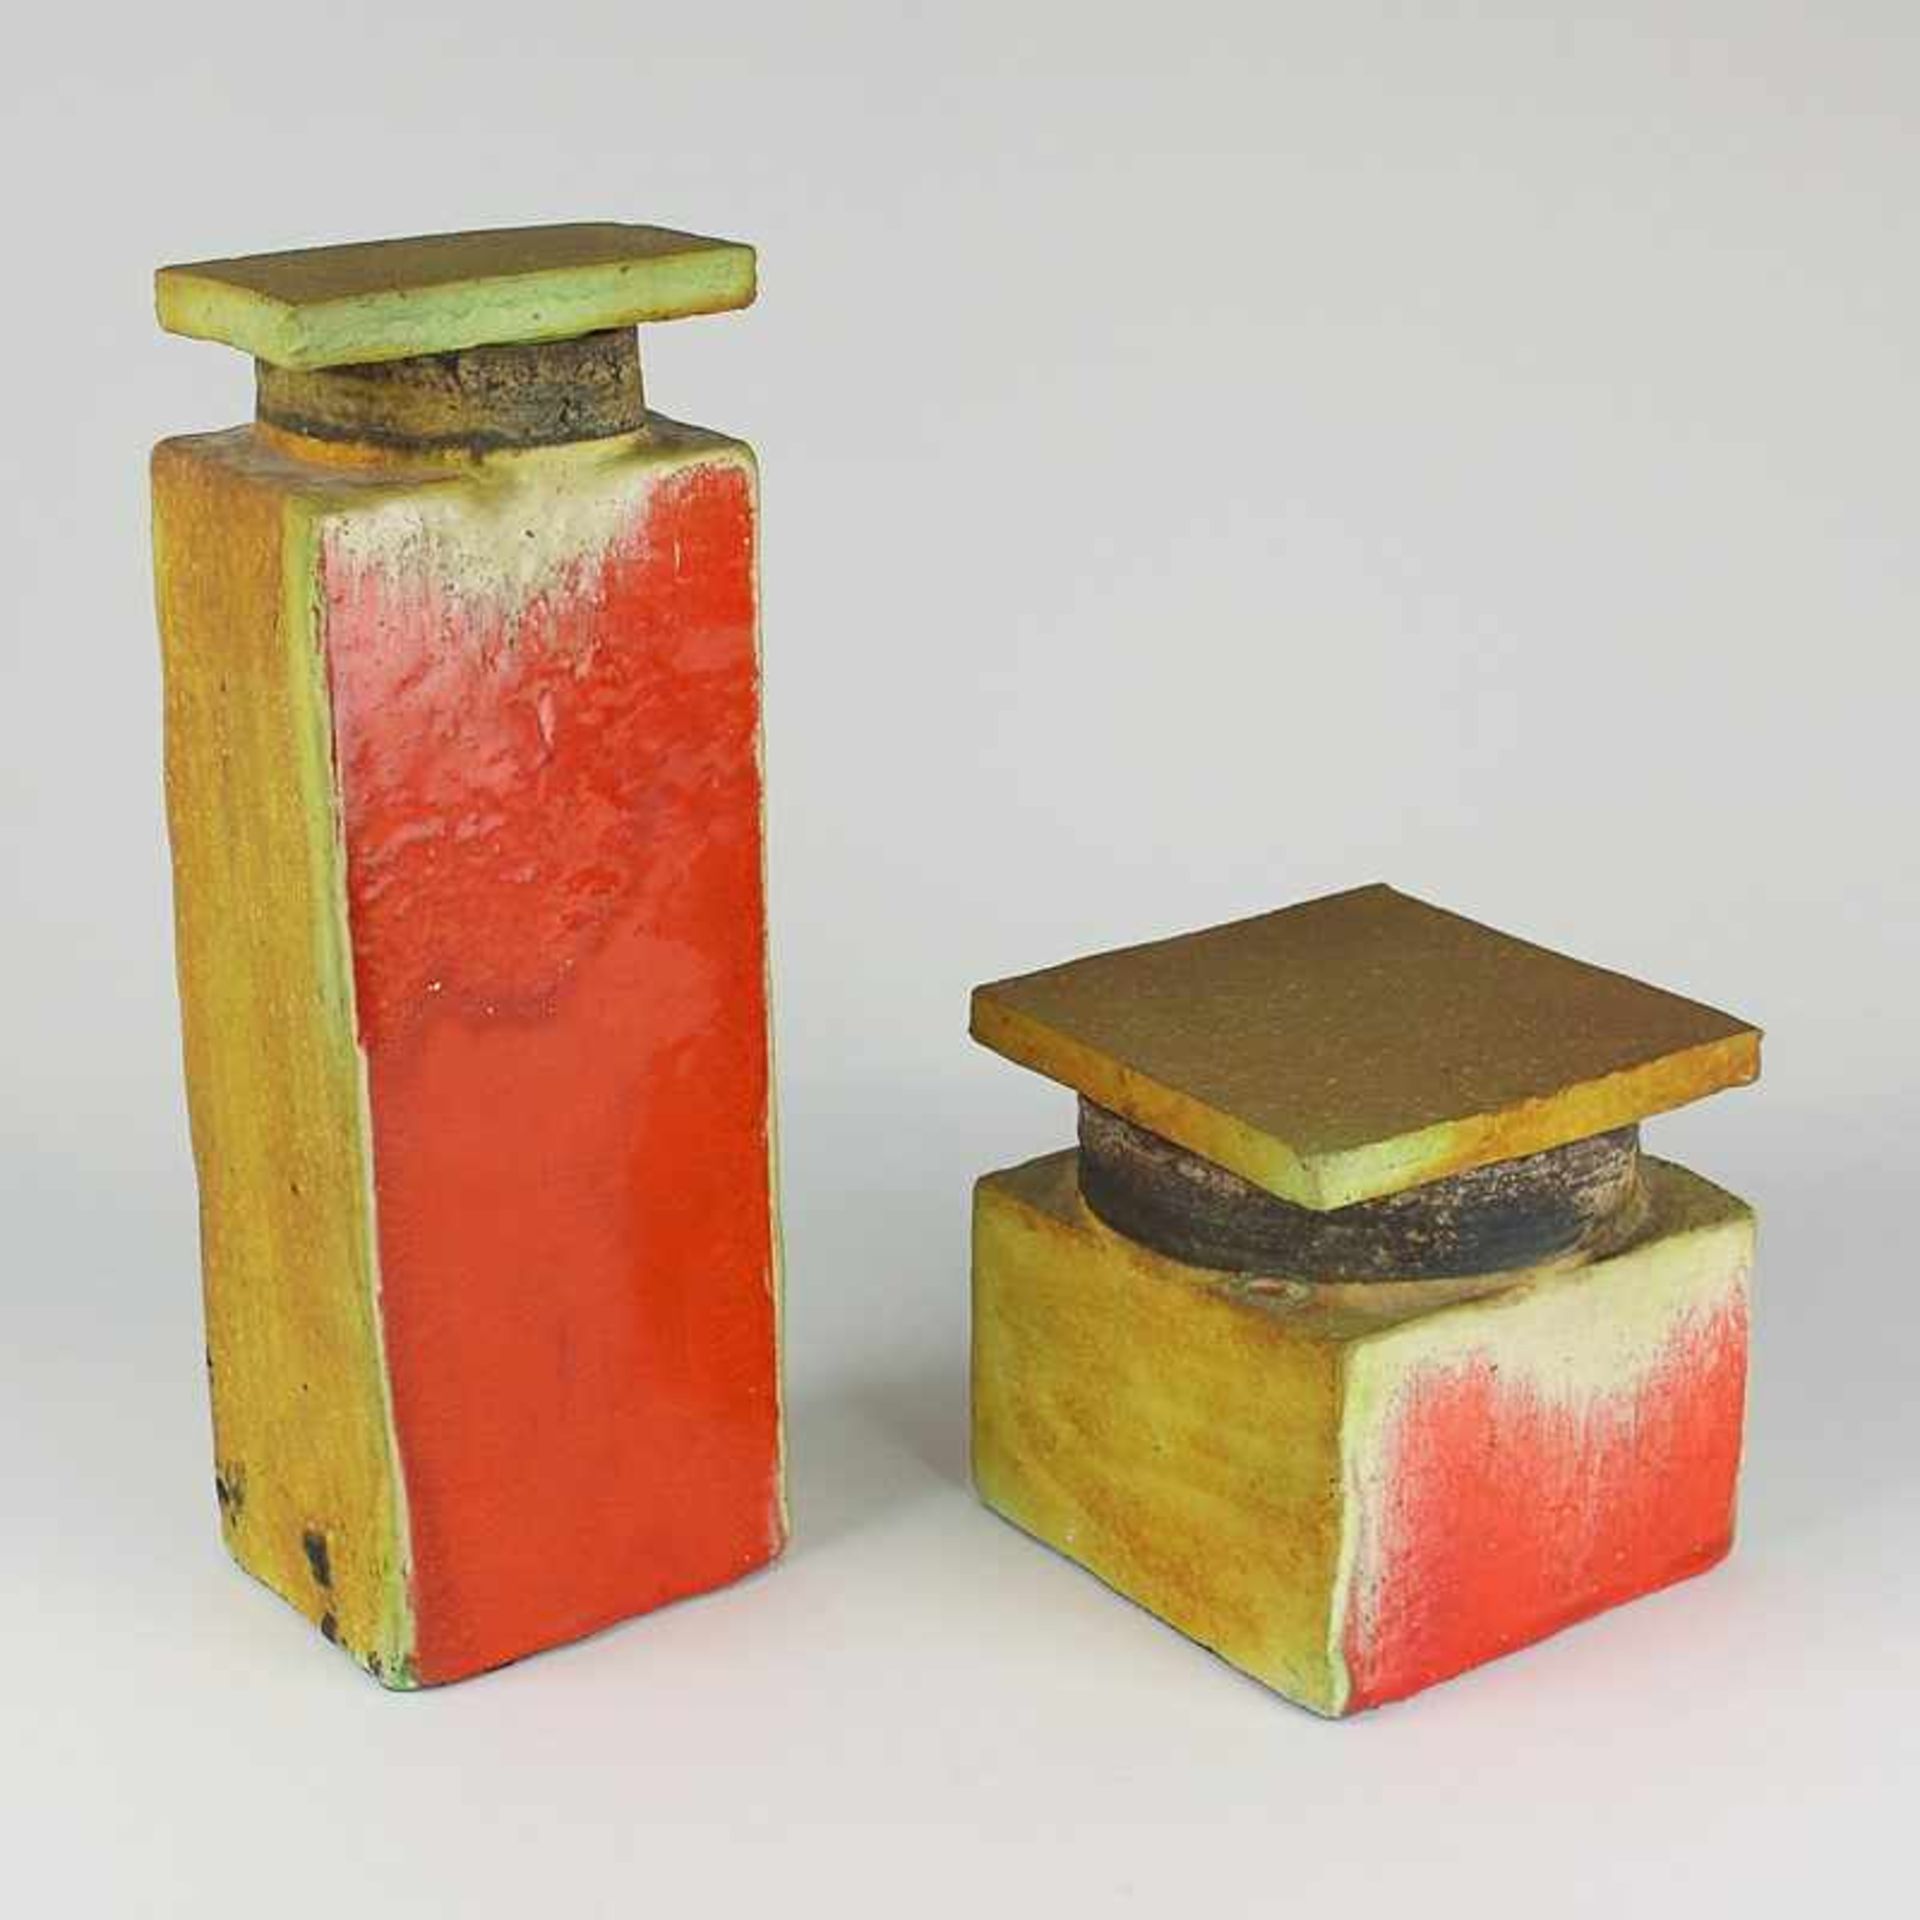 Studiokeramik - Zwei Teile 1960er J., Keramik, 1 Deckelvase, 1 Deckeldose, rechteckige archaische